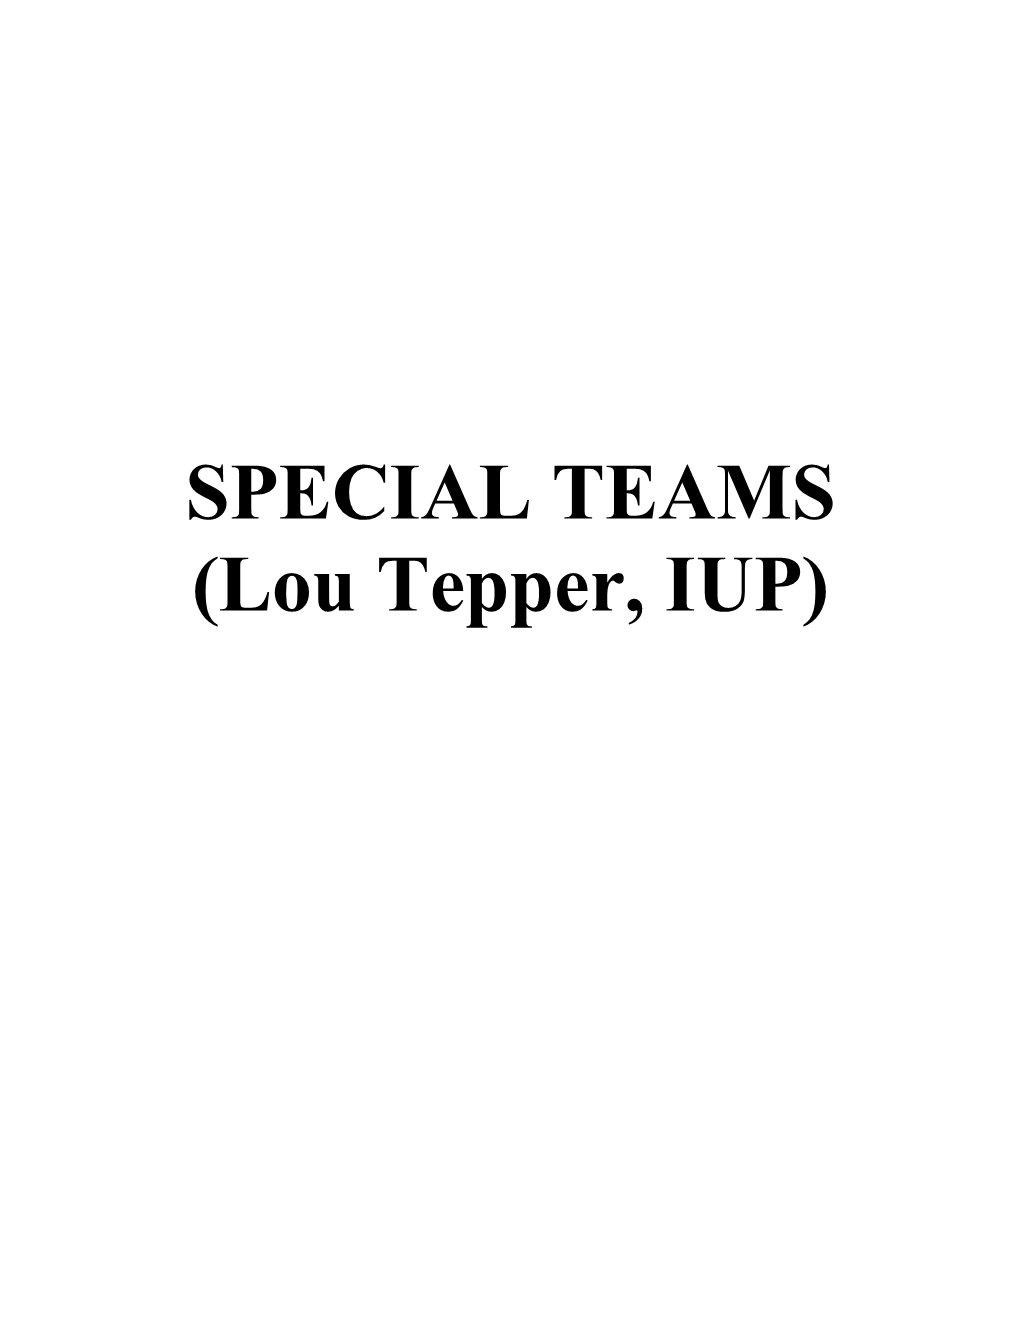 Lou Tepper, IUP